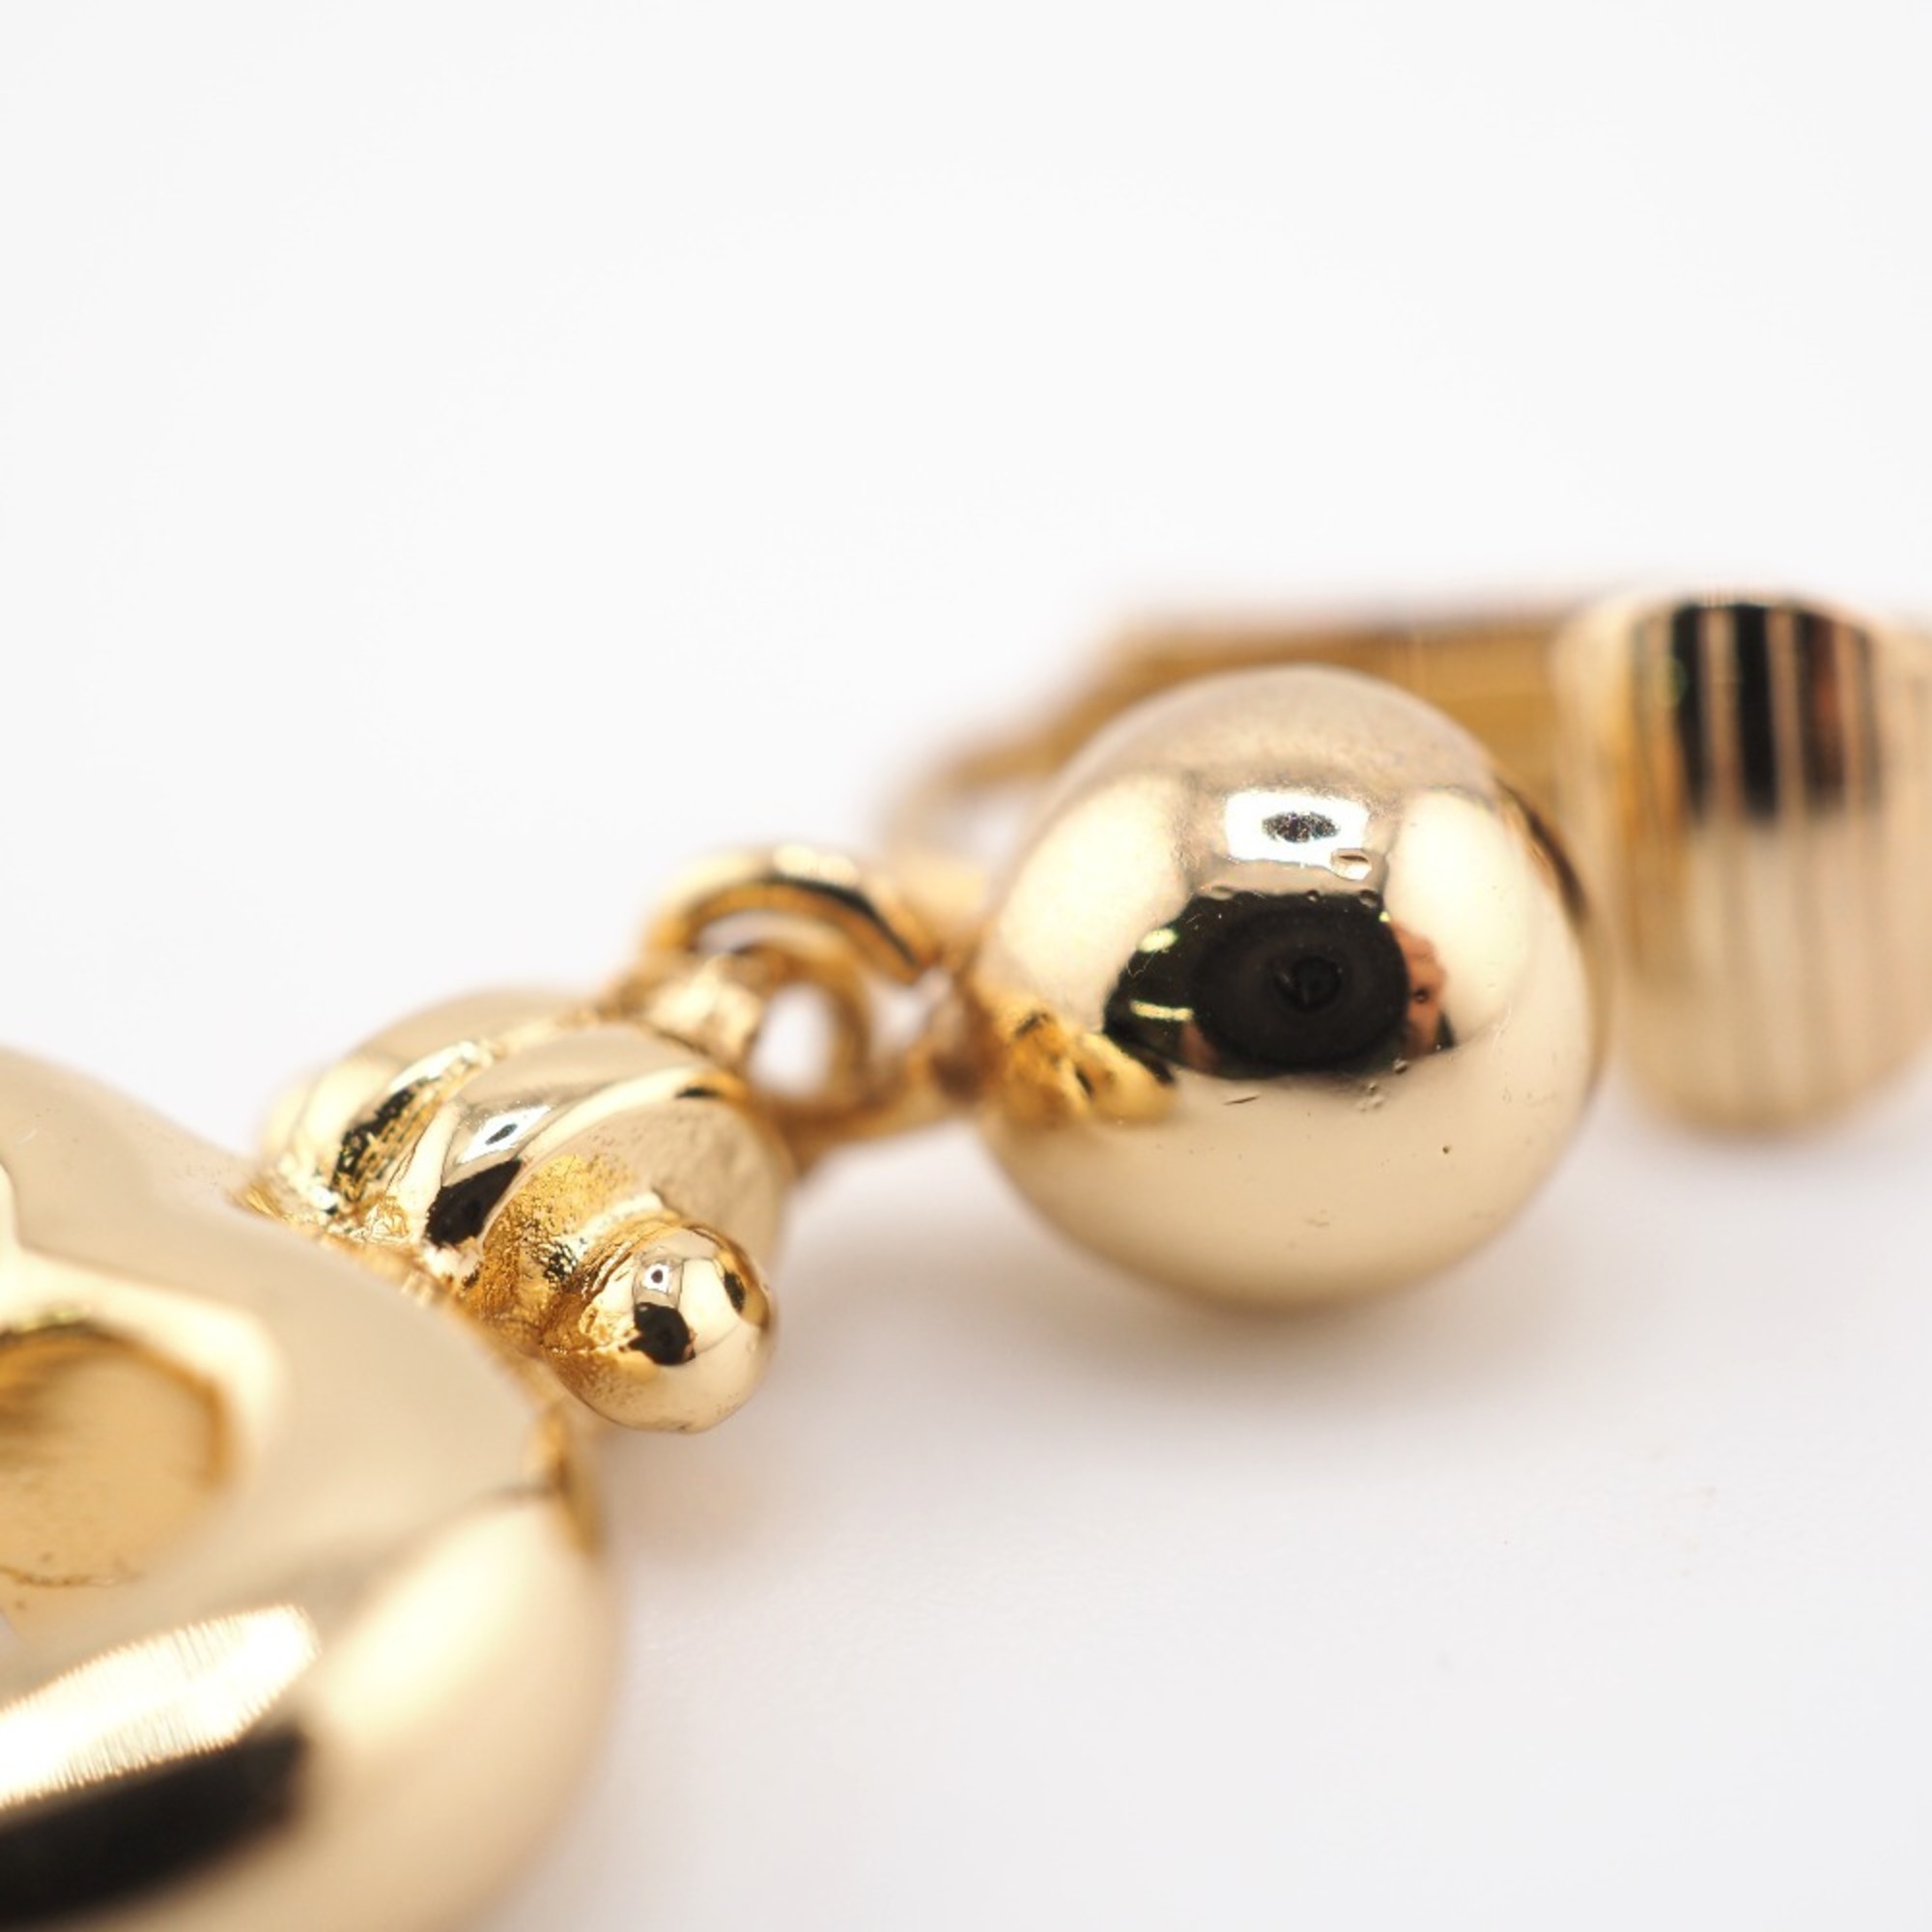 Christian Dior/Christian Dior heart earrings gold ladies